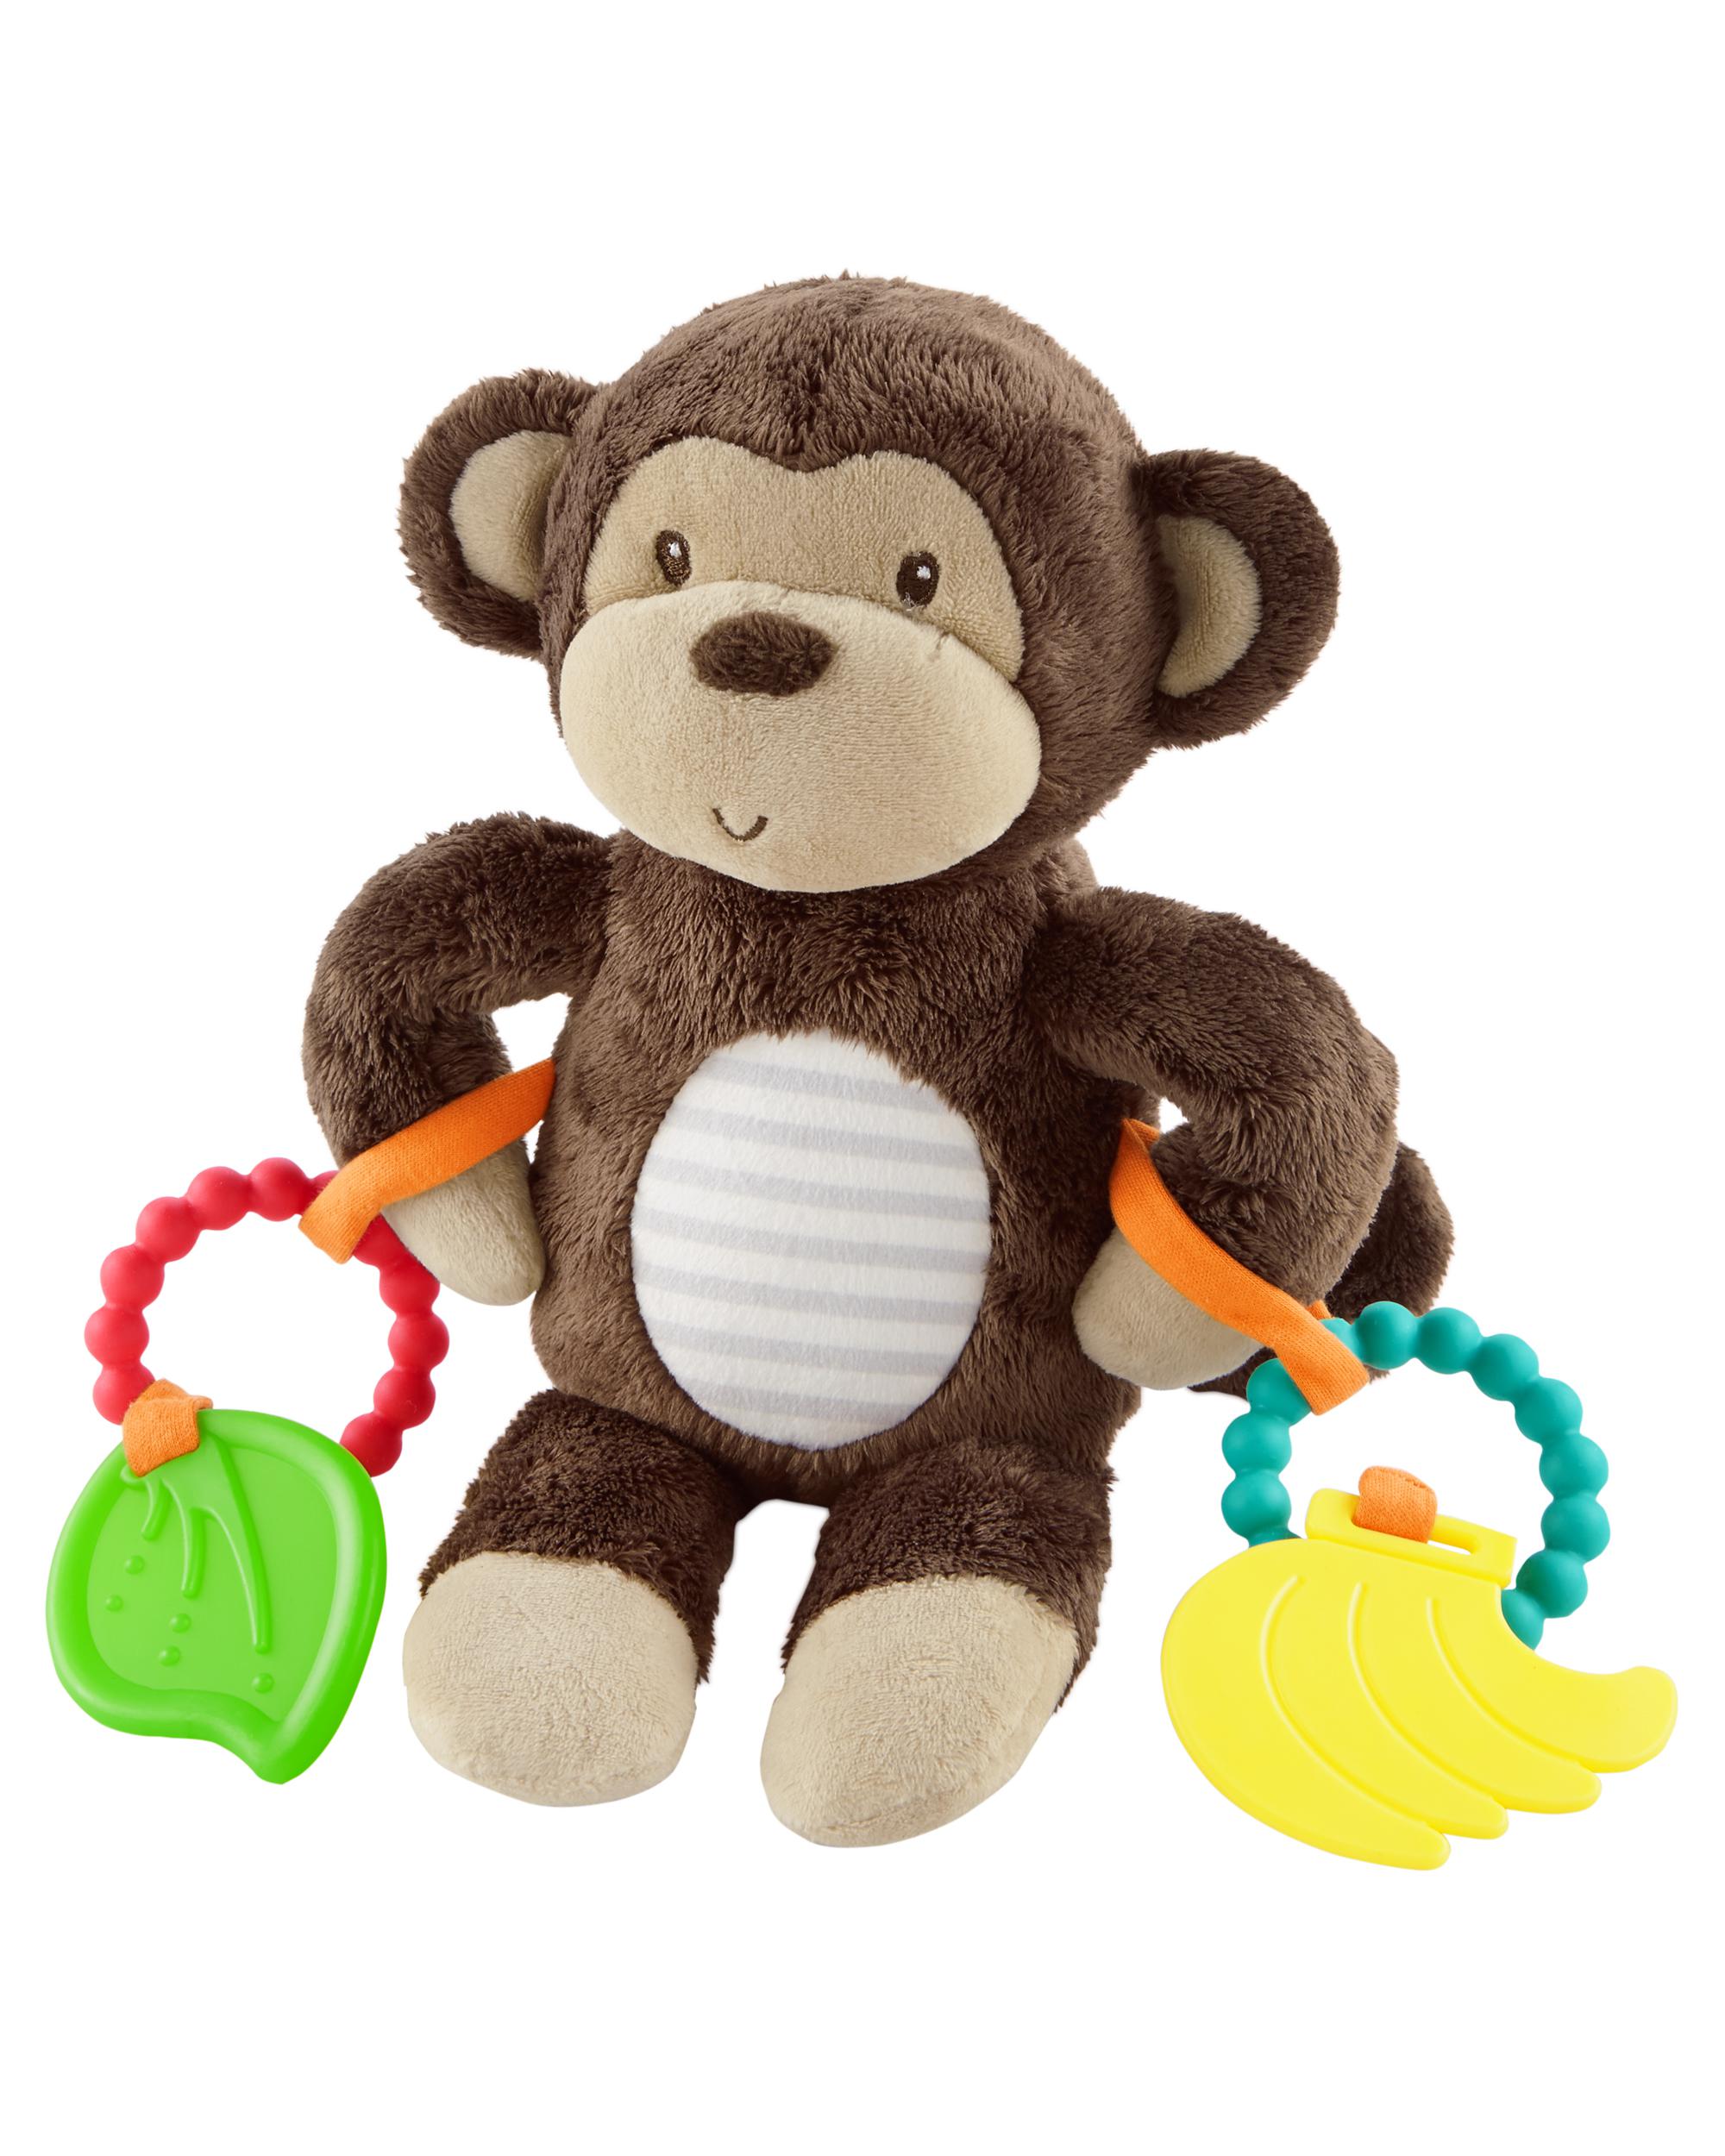 Baby Monkey Activity Teething Toy